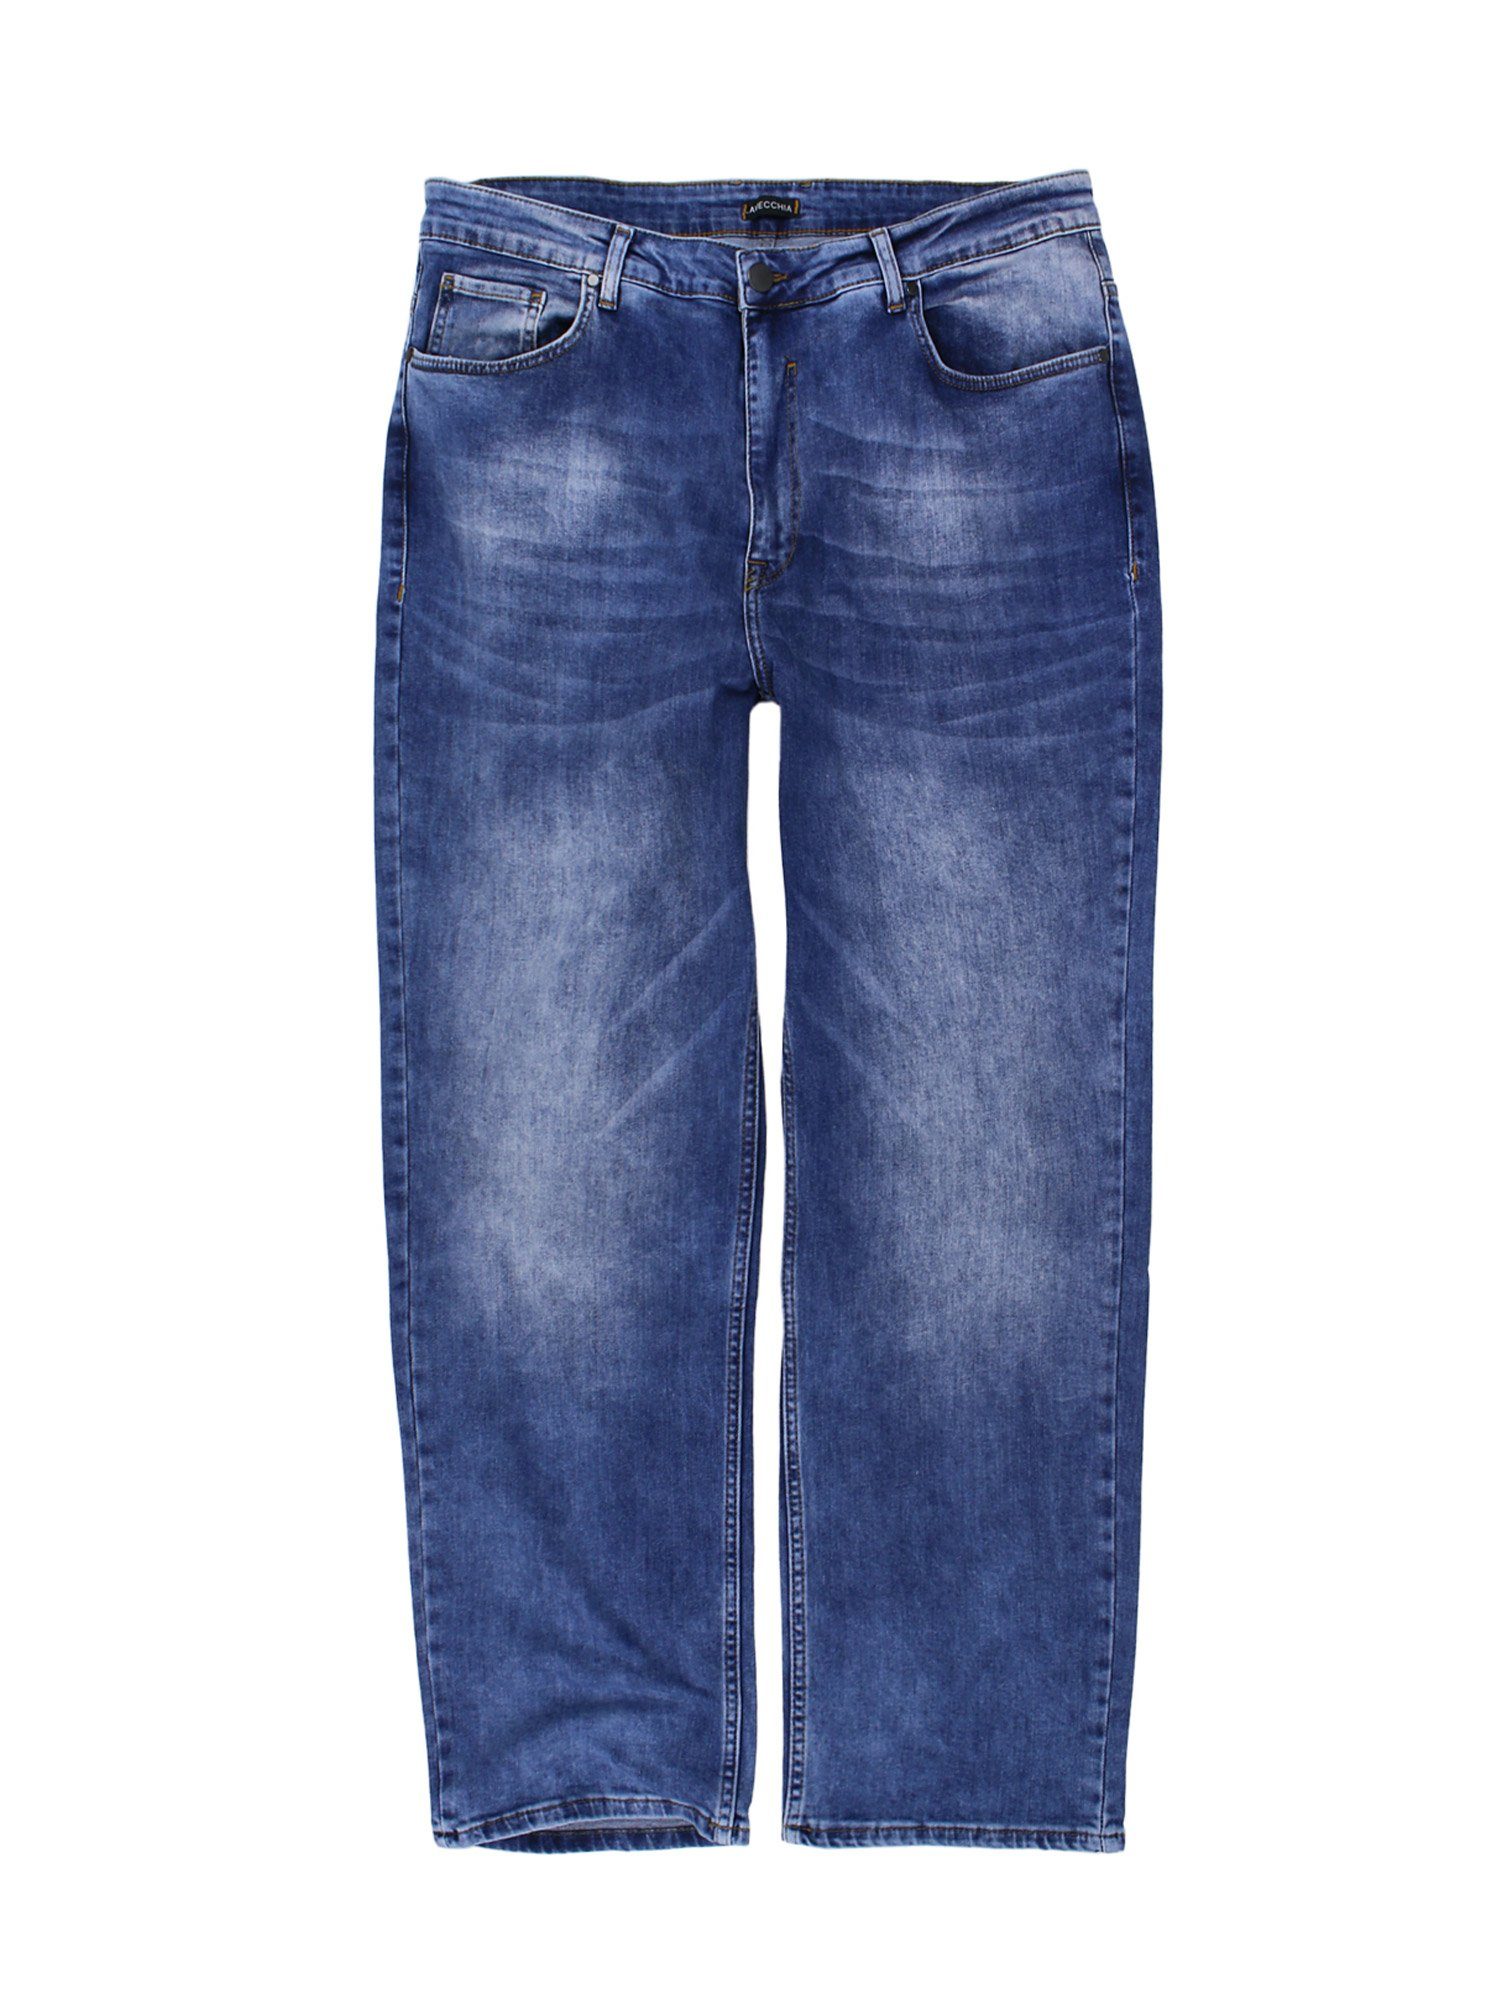 Lavecchia Comfort-fit-Jeans Übergrößen Herren Elasthan Jeanshose mit Stretch LV-501 stoneblau